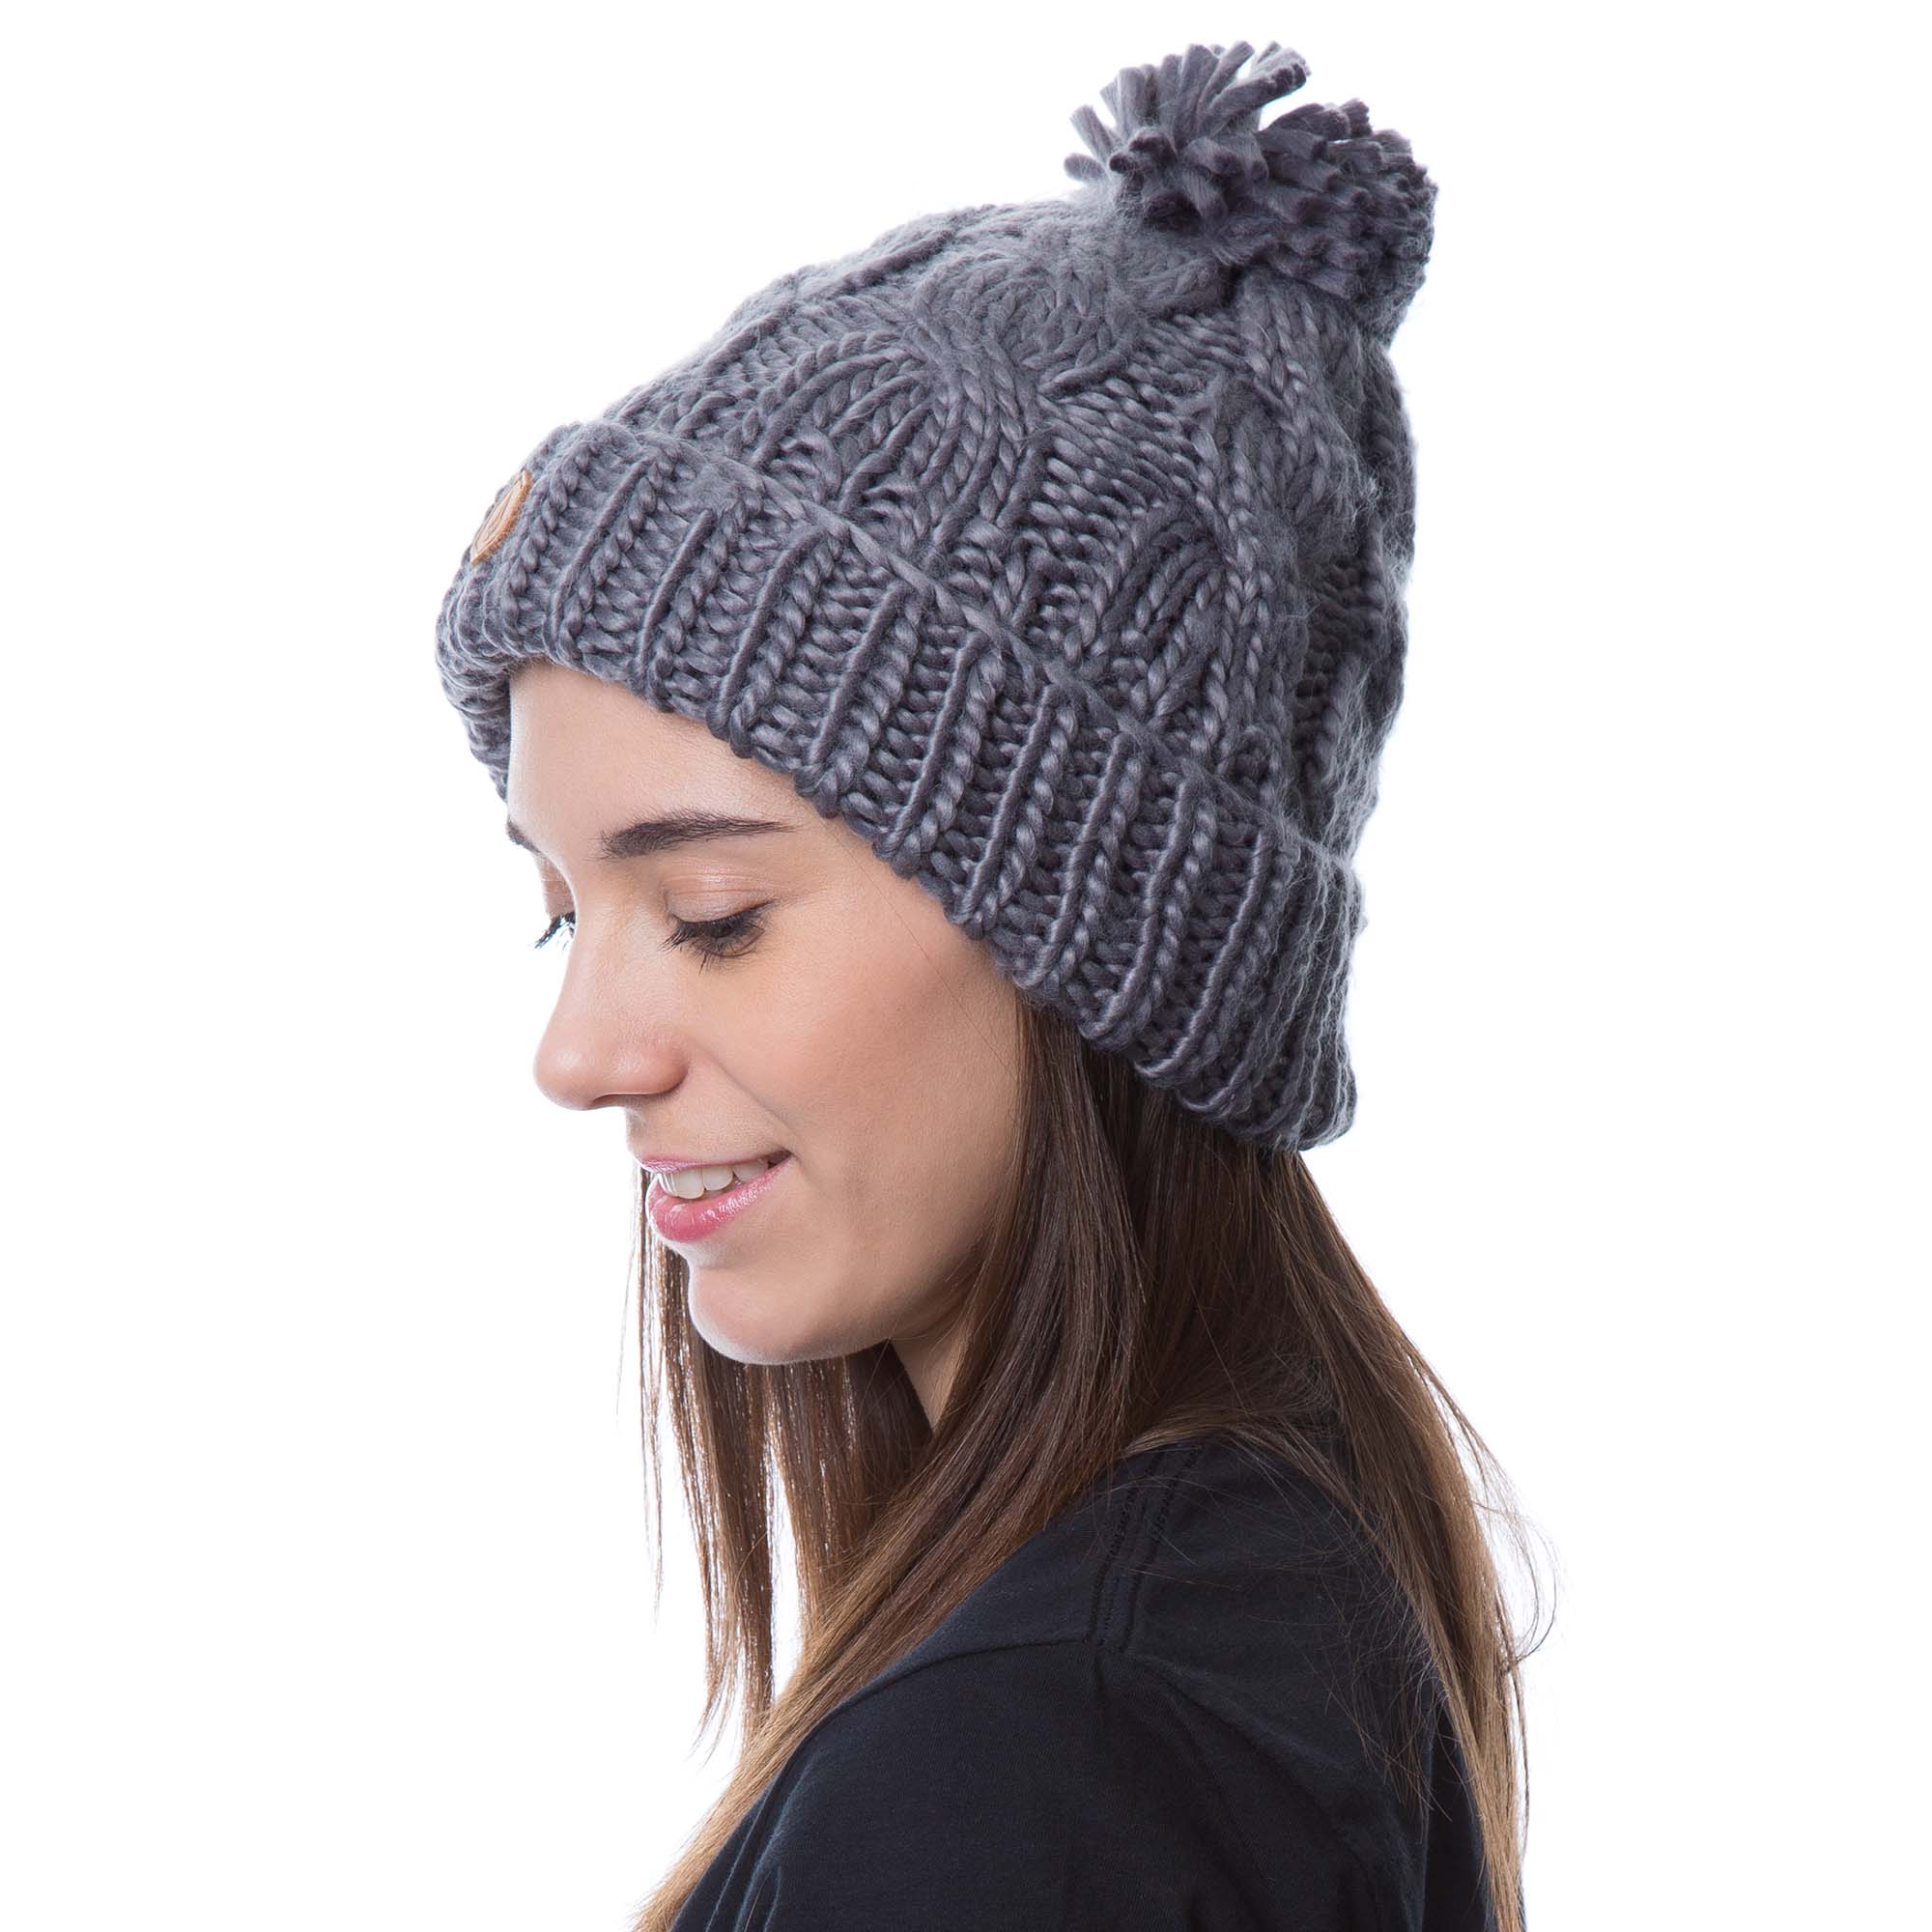 Volcom Hand Knit Women's Winter Bobble Hat / Pom Beanie